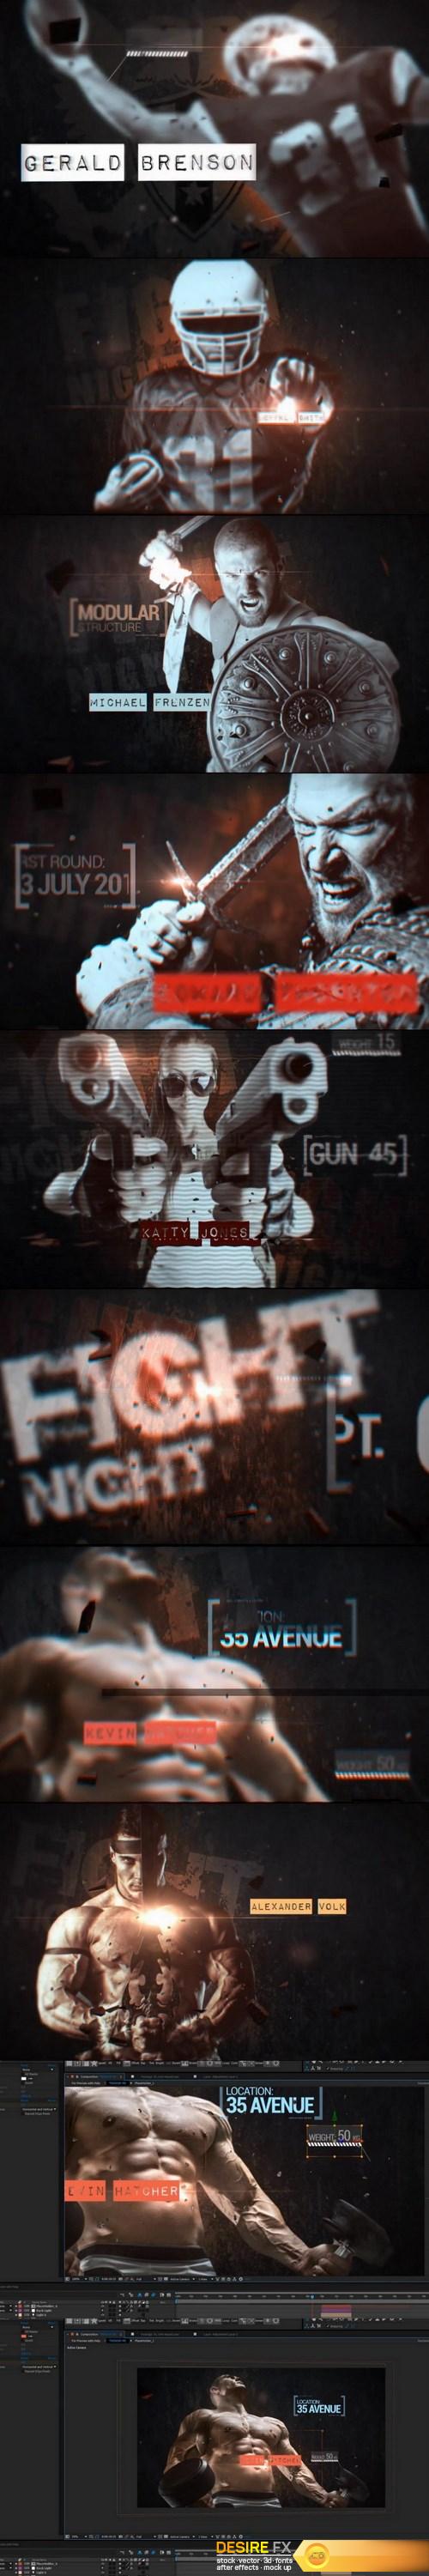 videohive-20193754-fight-night-promo